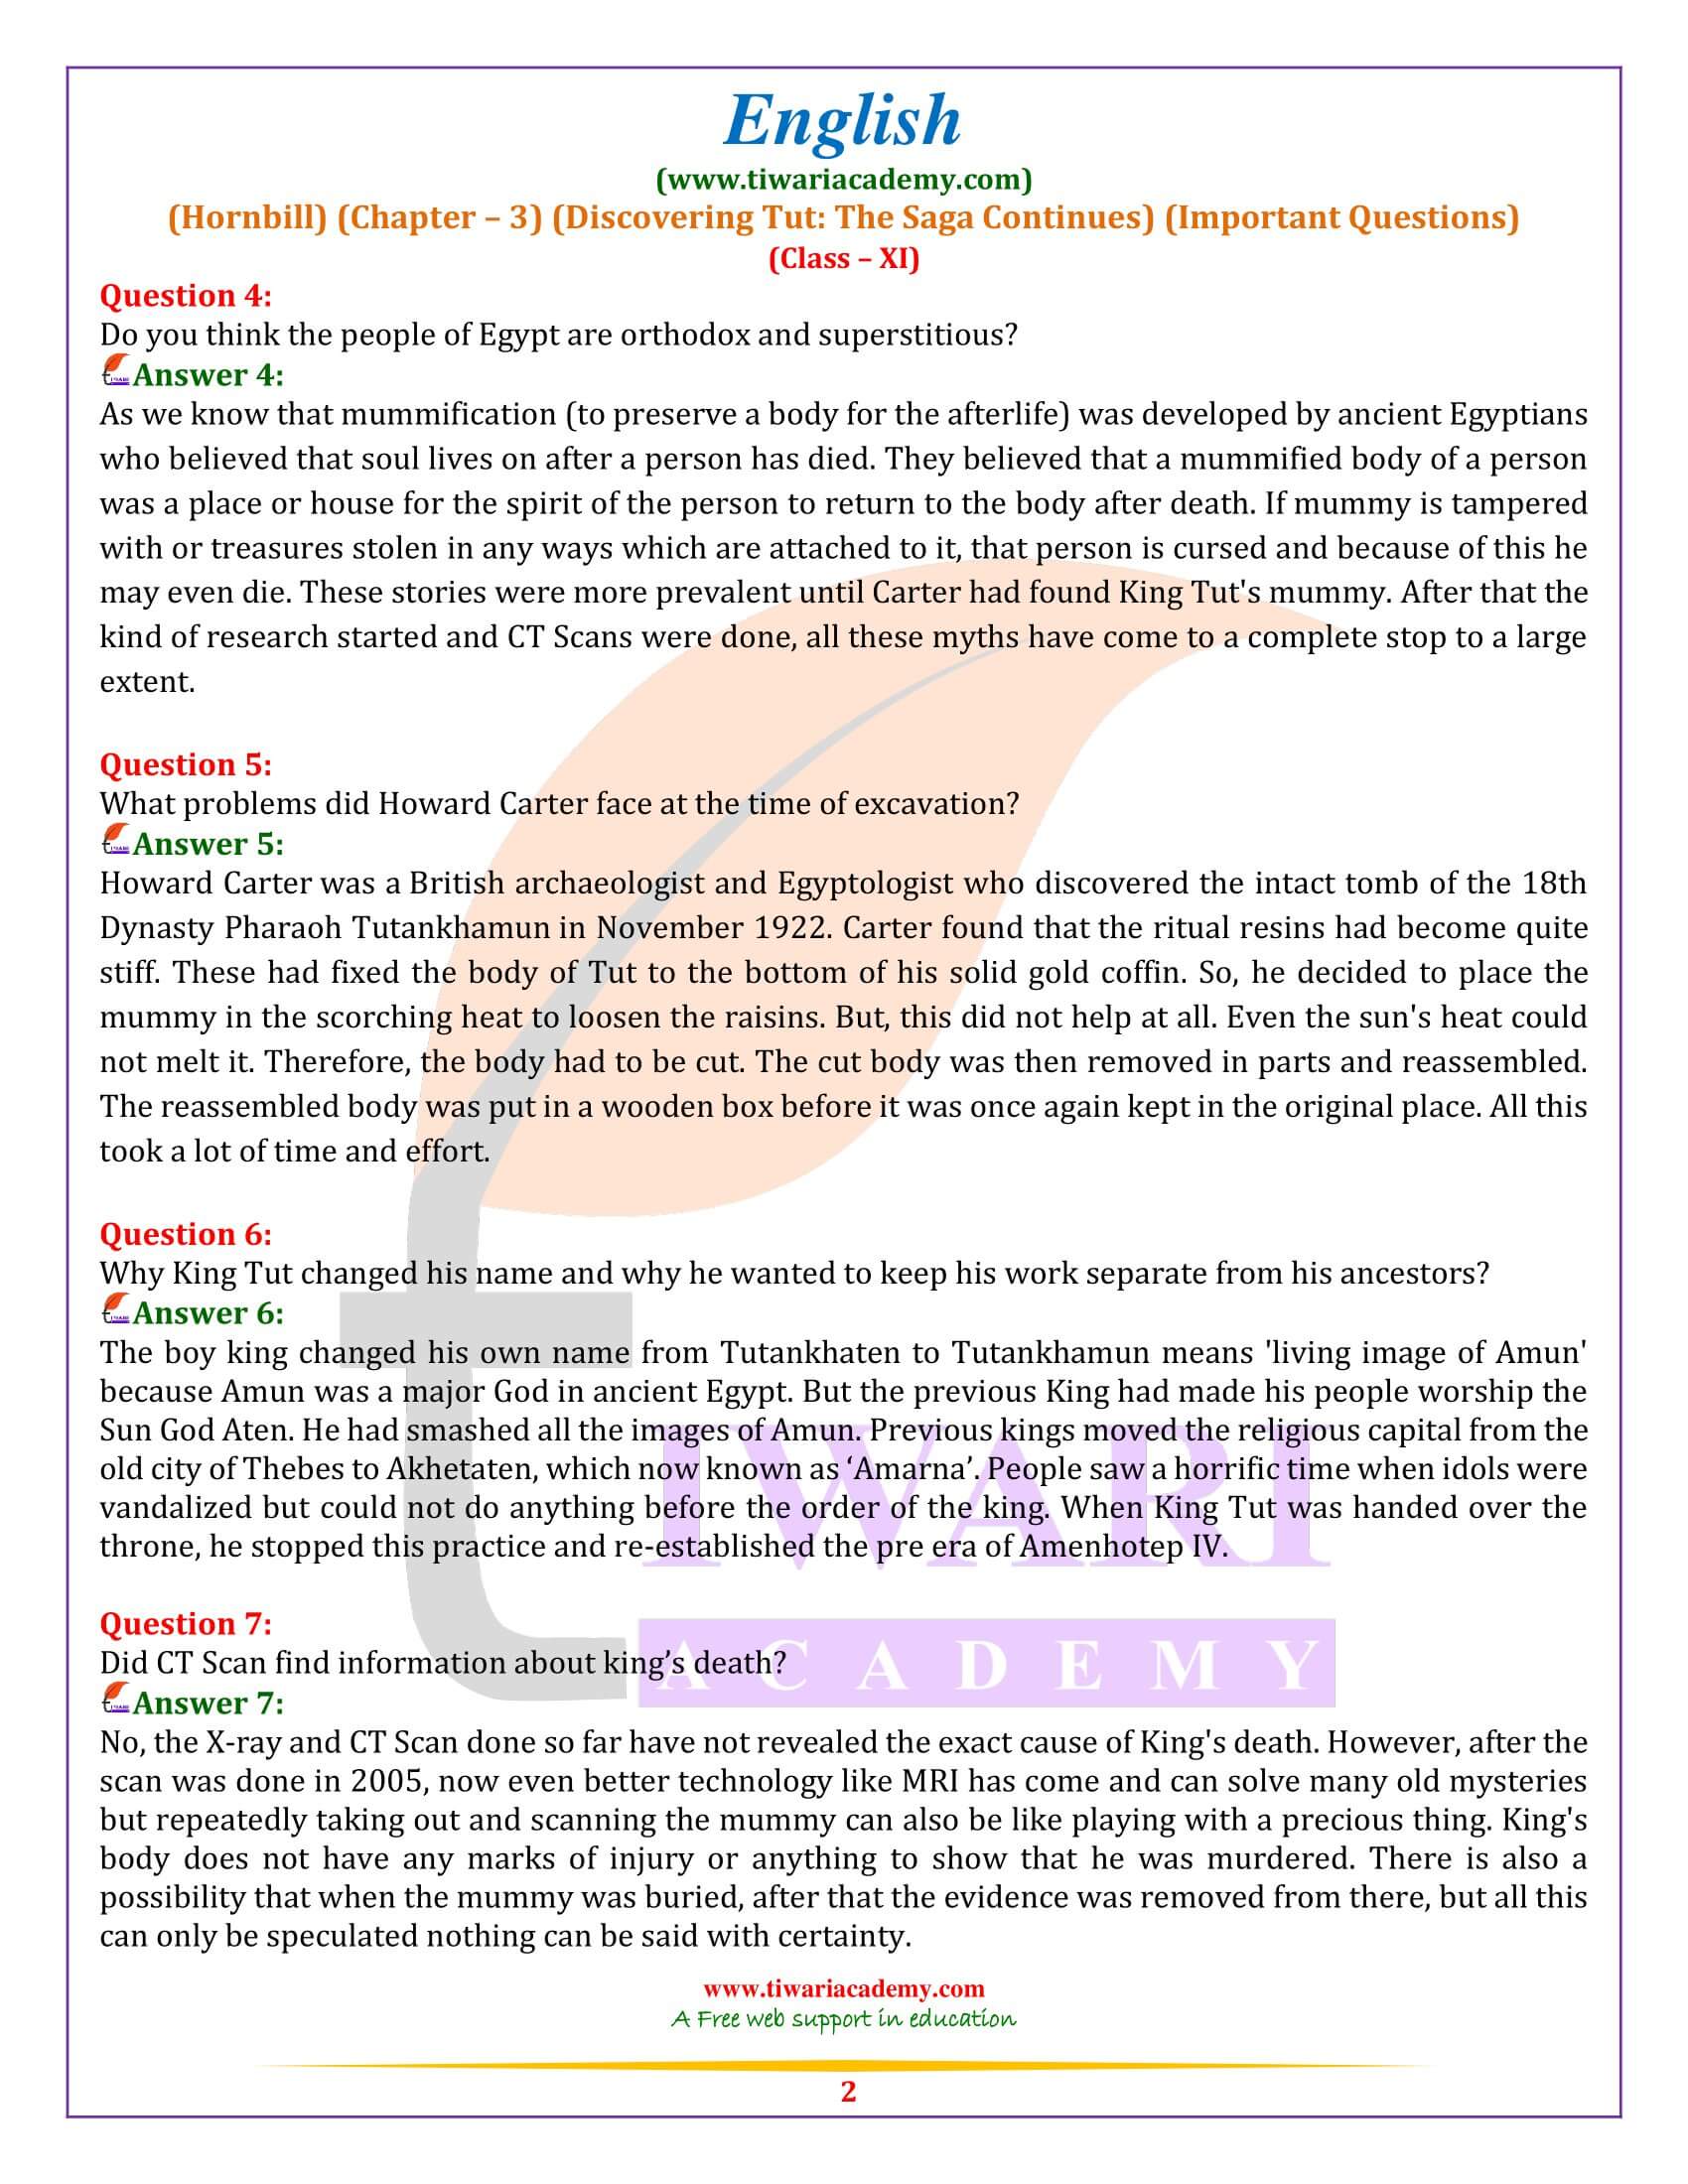 Class 11 English Hornbill Chapter 3 Extra Questions